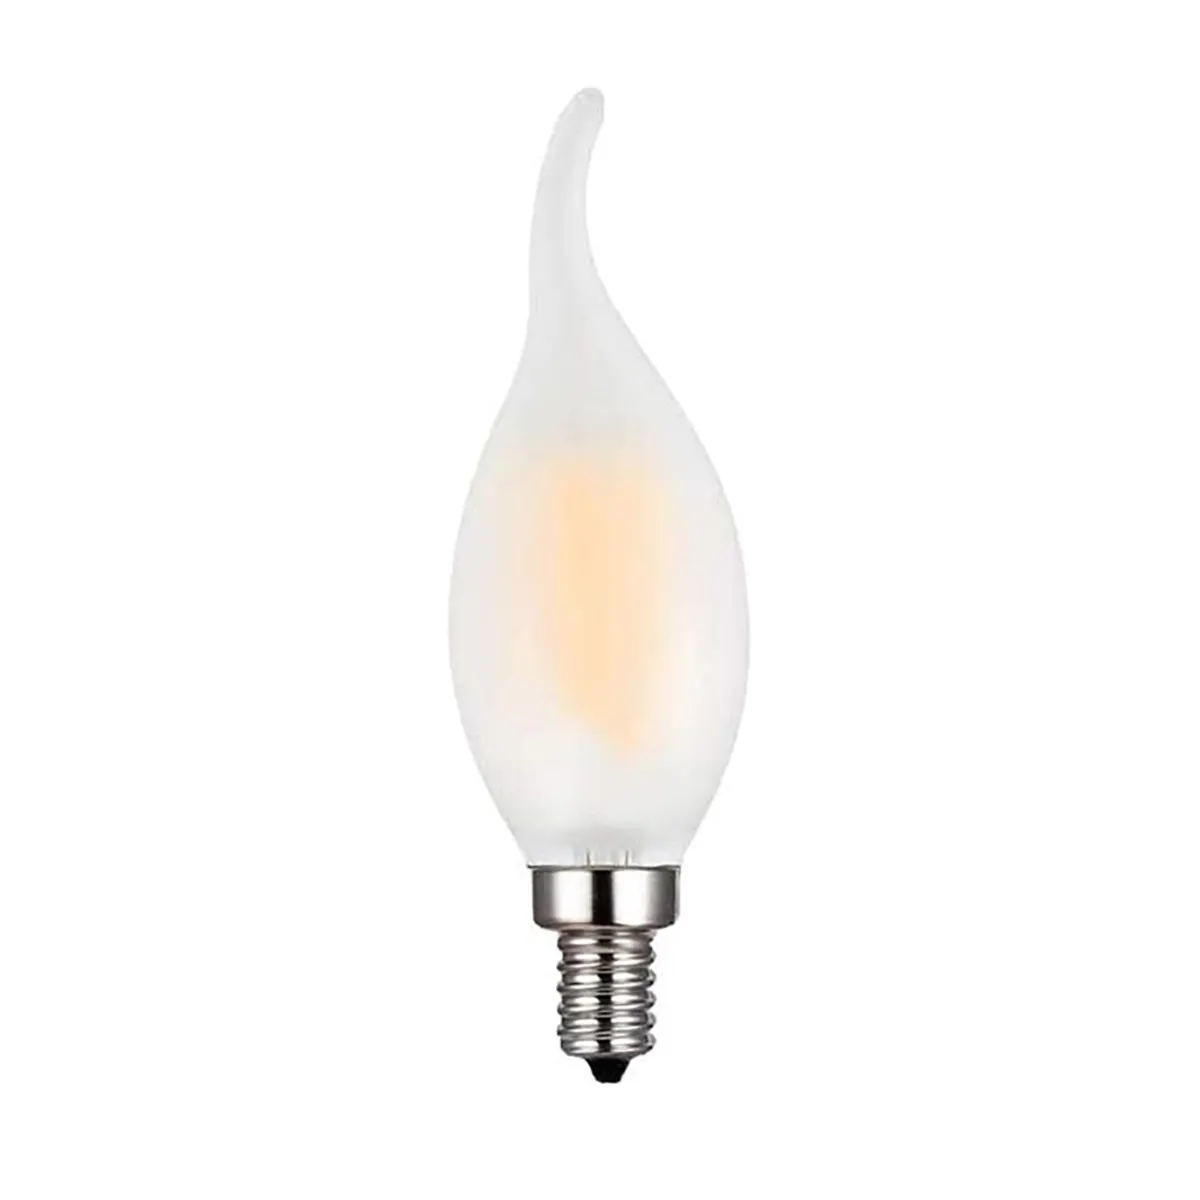 OEM ODM Edison estilo E14 bombilla de vela 2W 4W 6W regulable blanco cálido C35L bombilla Led esmerilada Luz de llama para candelabro